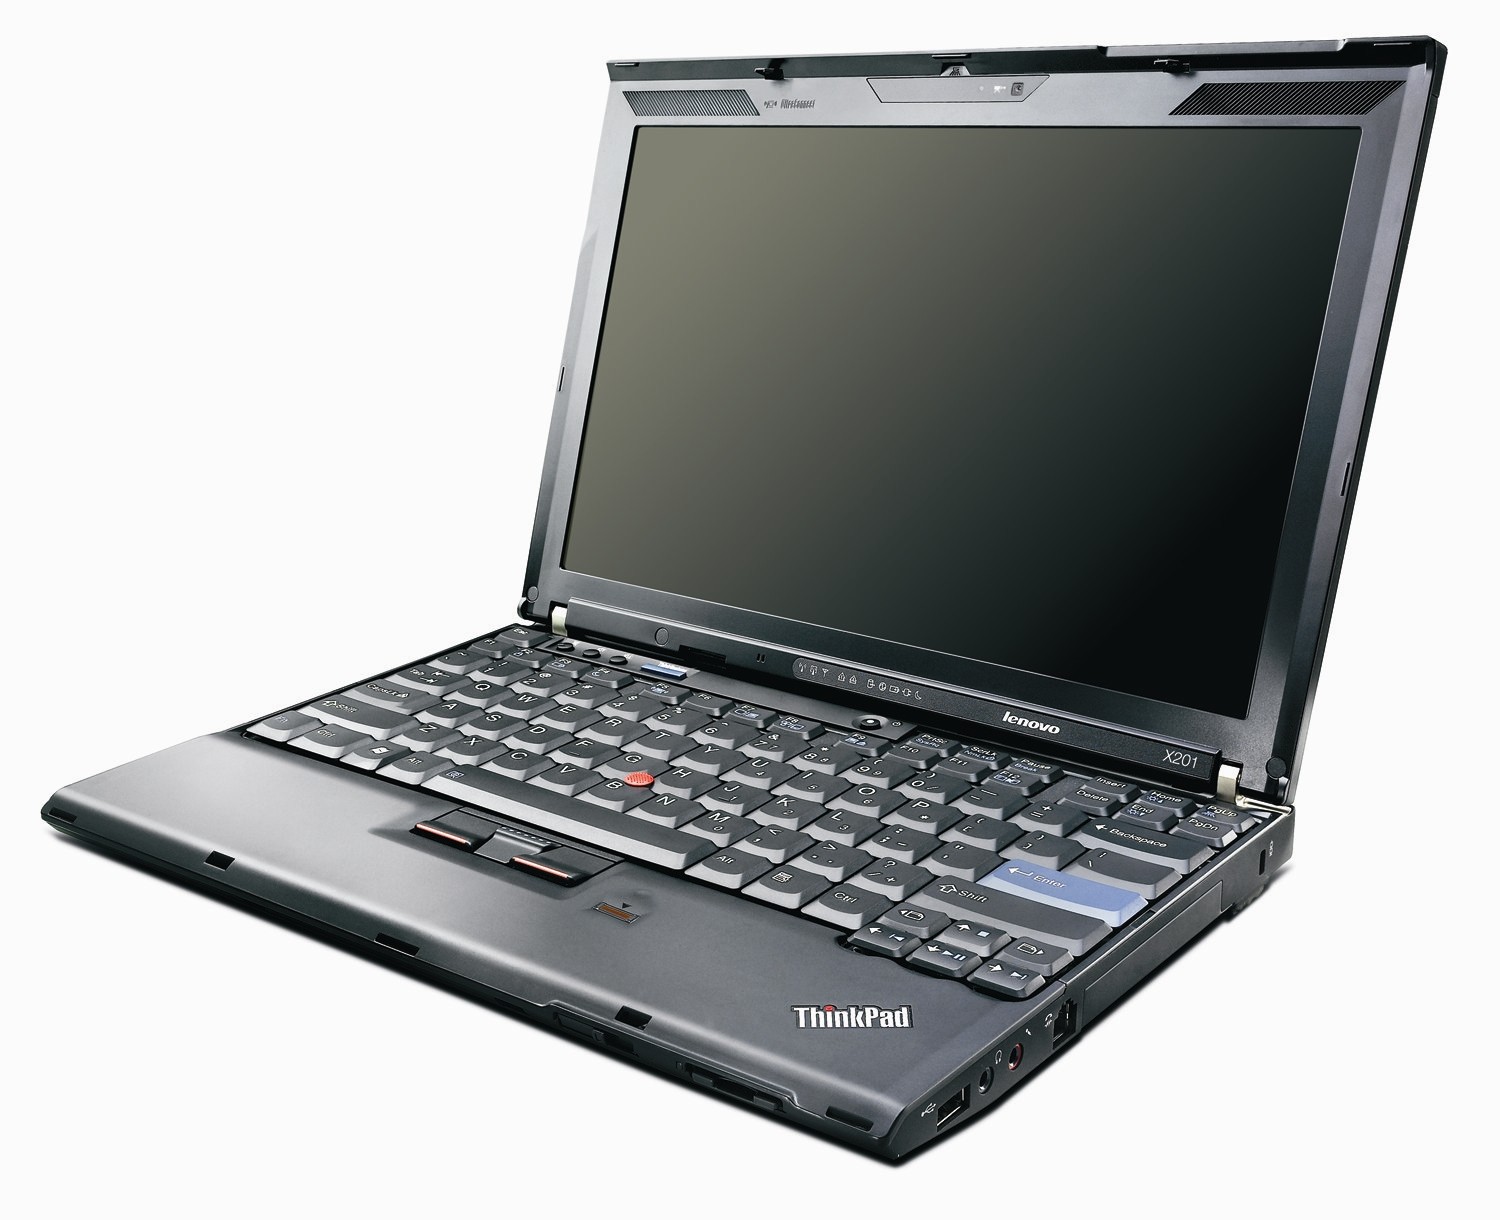 Lenovo ThinkPad X201 (ve variantě bez touchpadu), zdroj lenovo.com